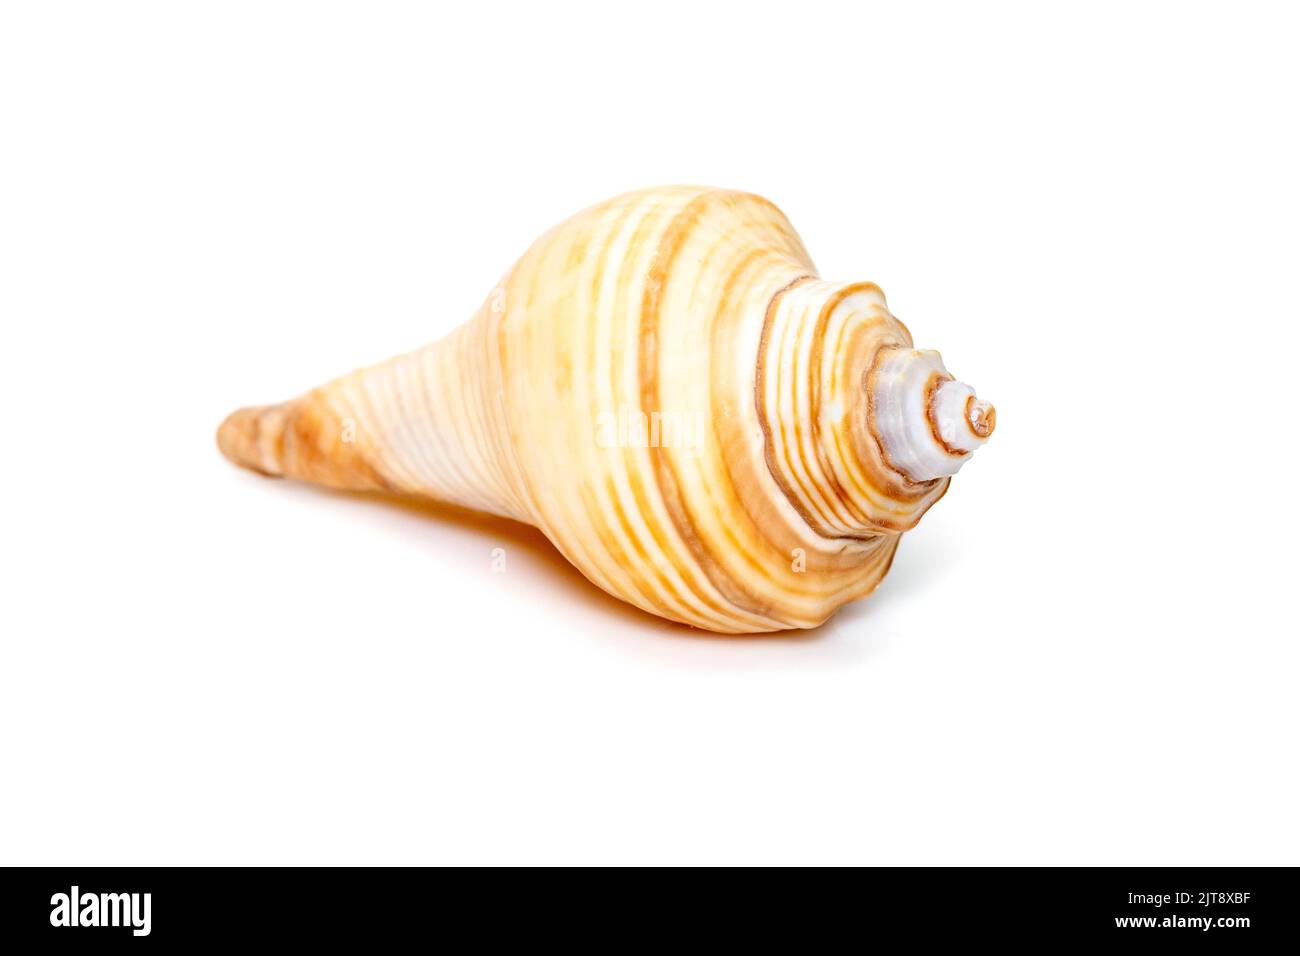 Image of hemifusus sea shells a genus of marine gastropod mollusks in the family Melongenidae isolated on white background. Undersea Animals. Sea Shel Stock Photo